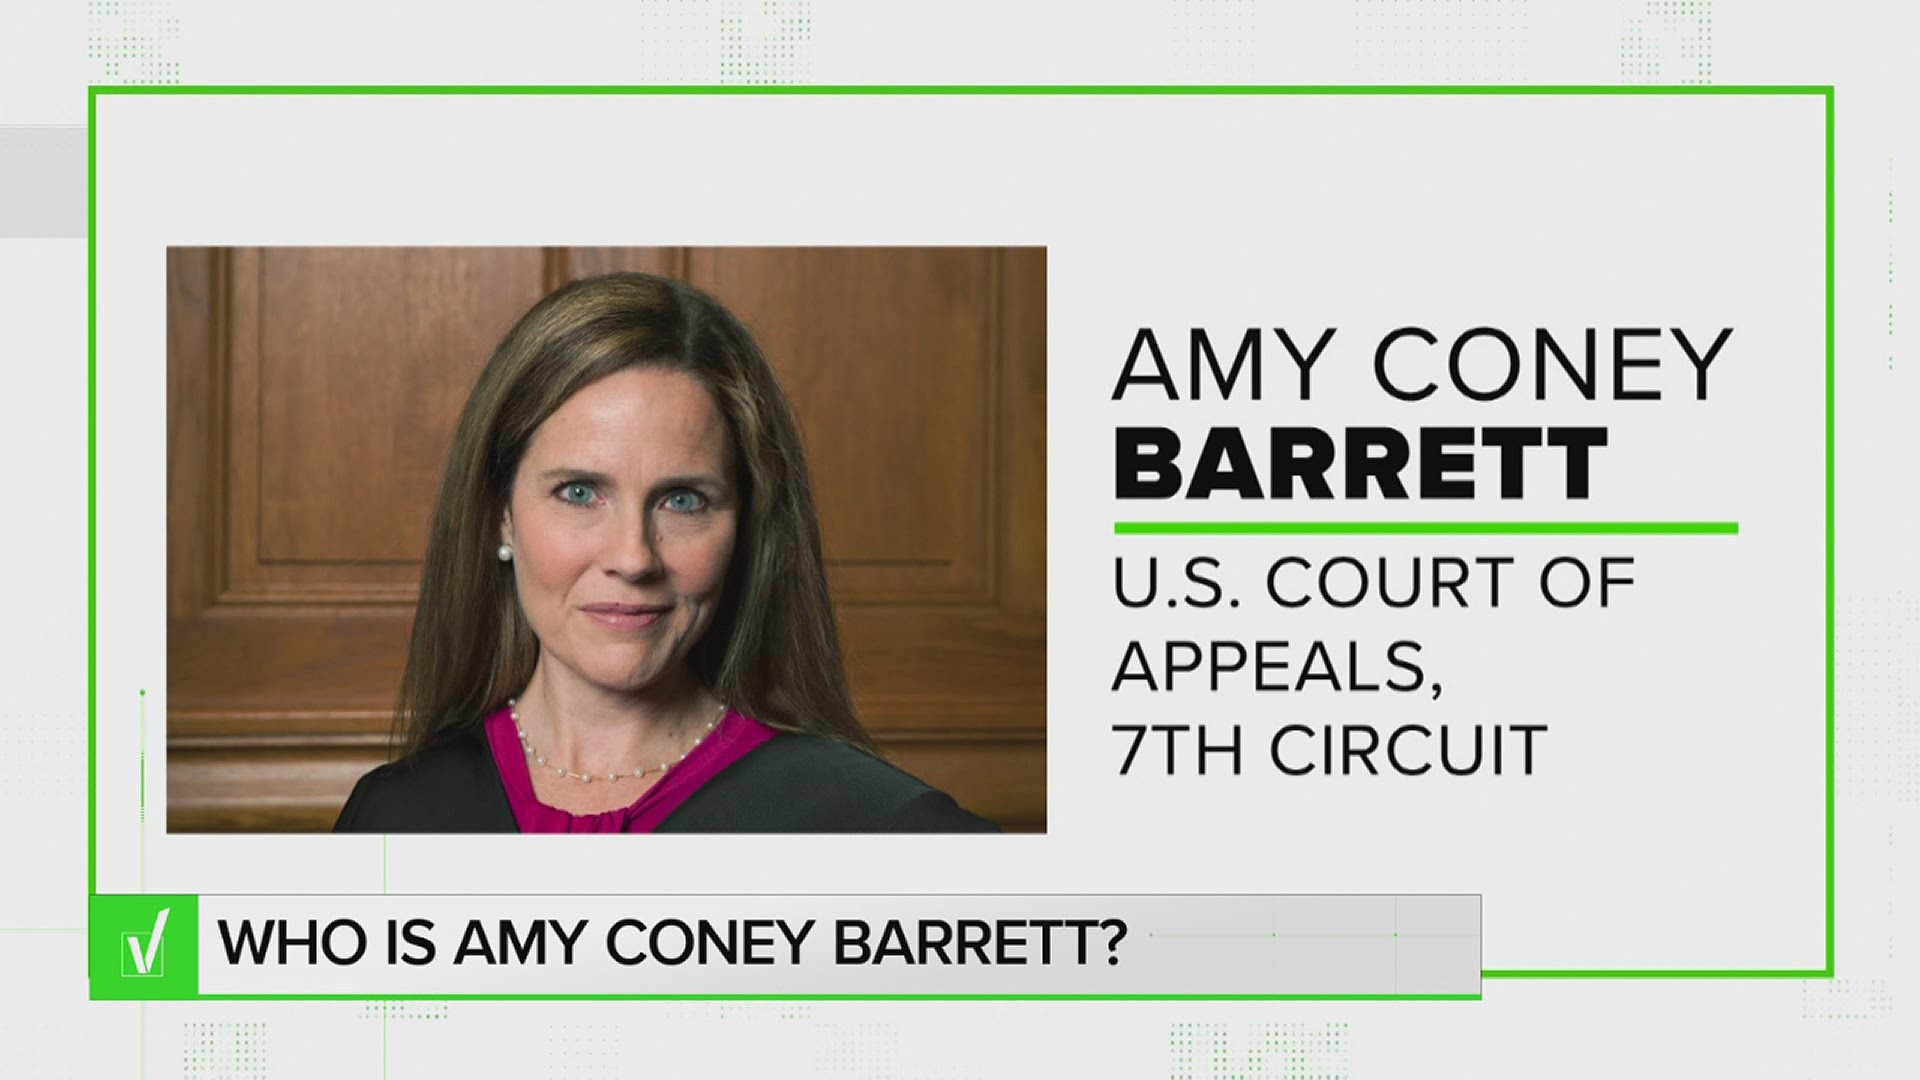 VERIFY: Who is Amy Coney Barrett?